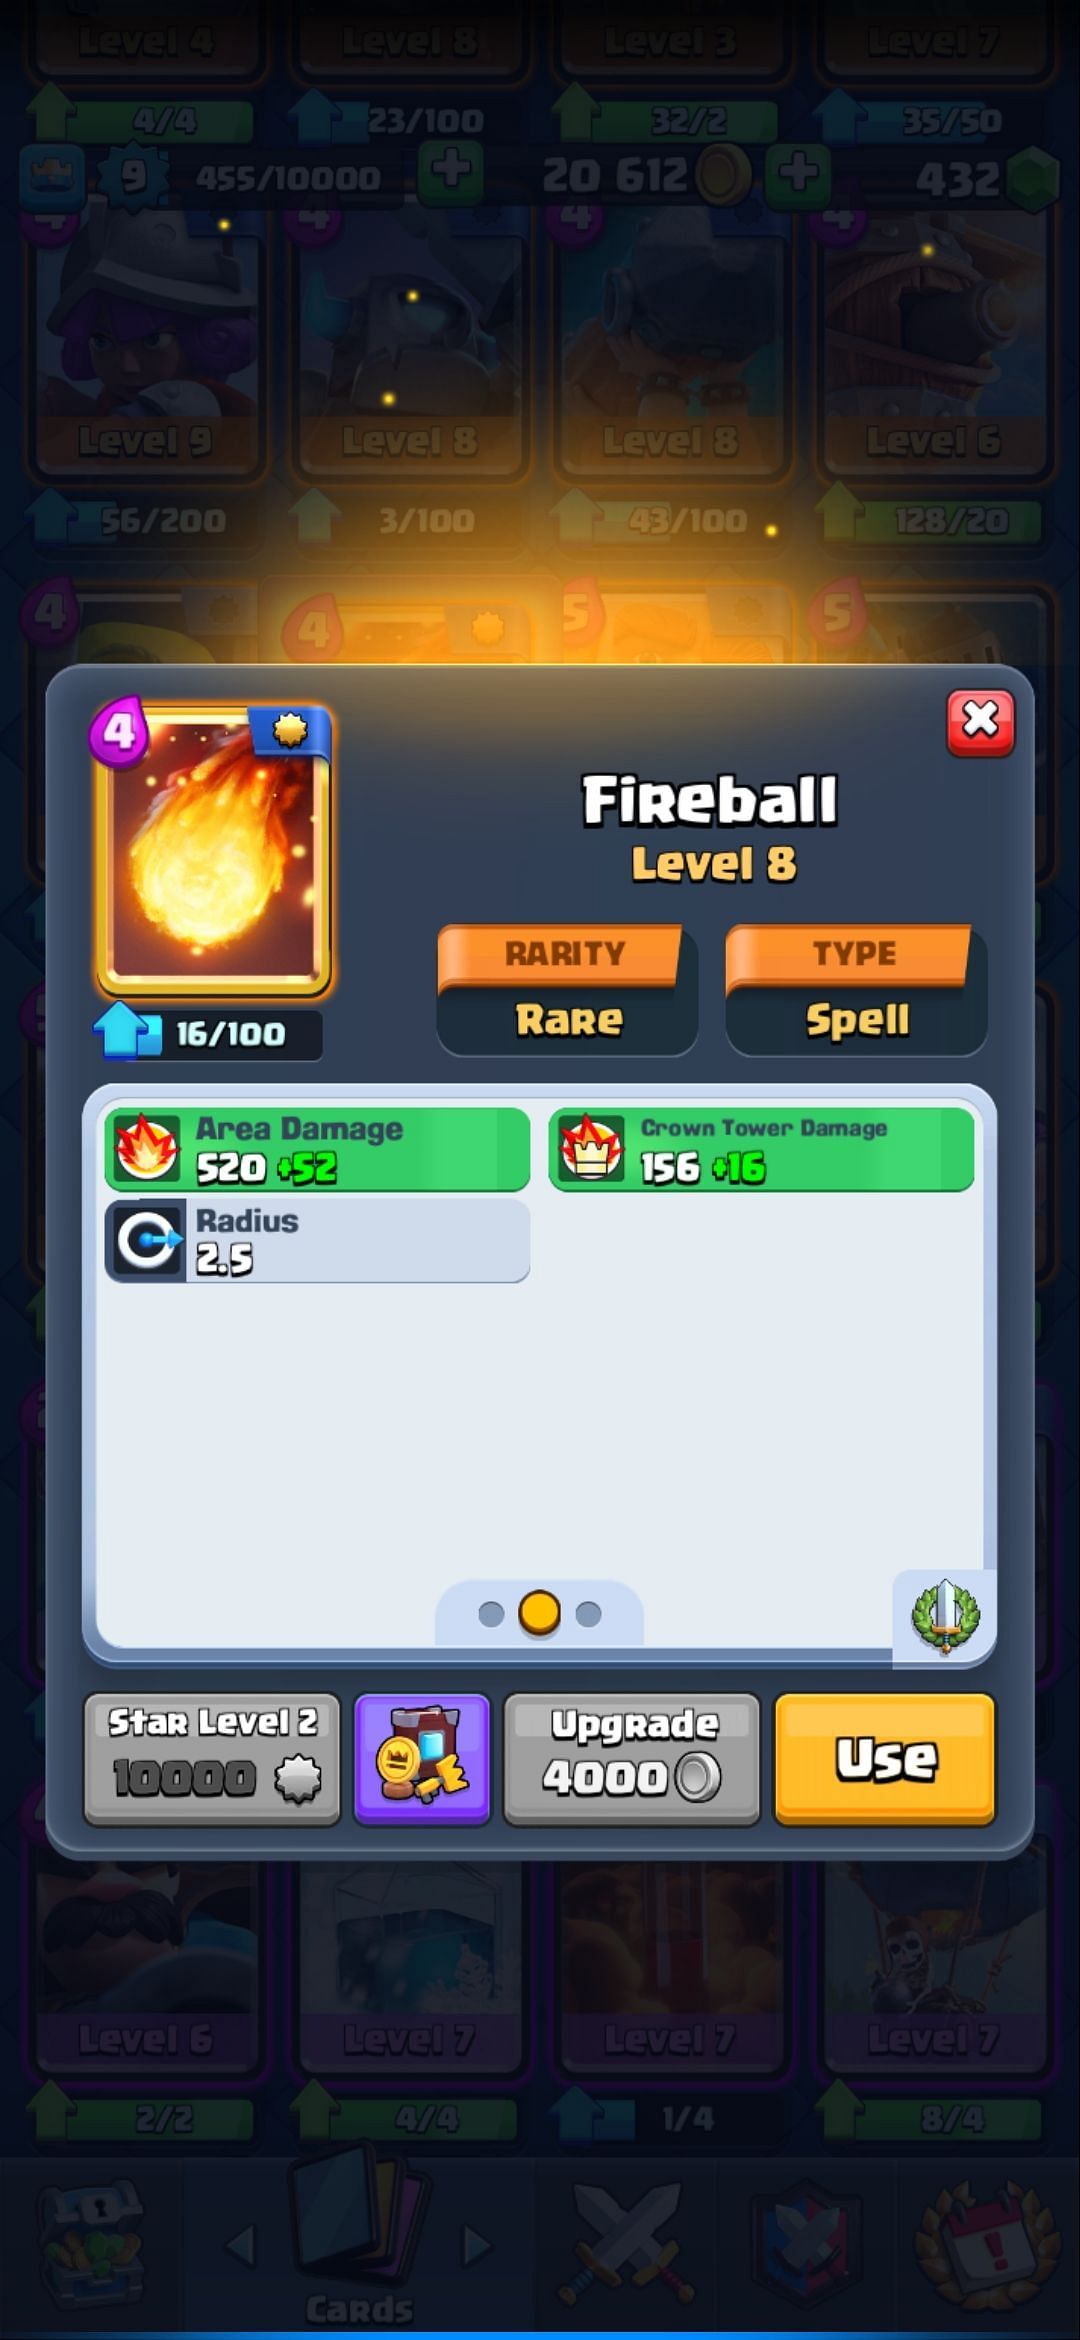 The Fireball card (Image via Sportskeeda)